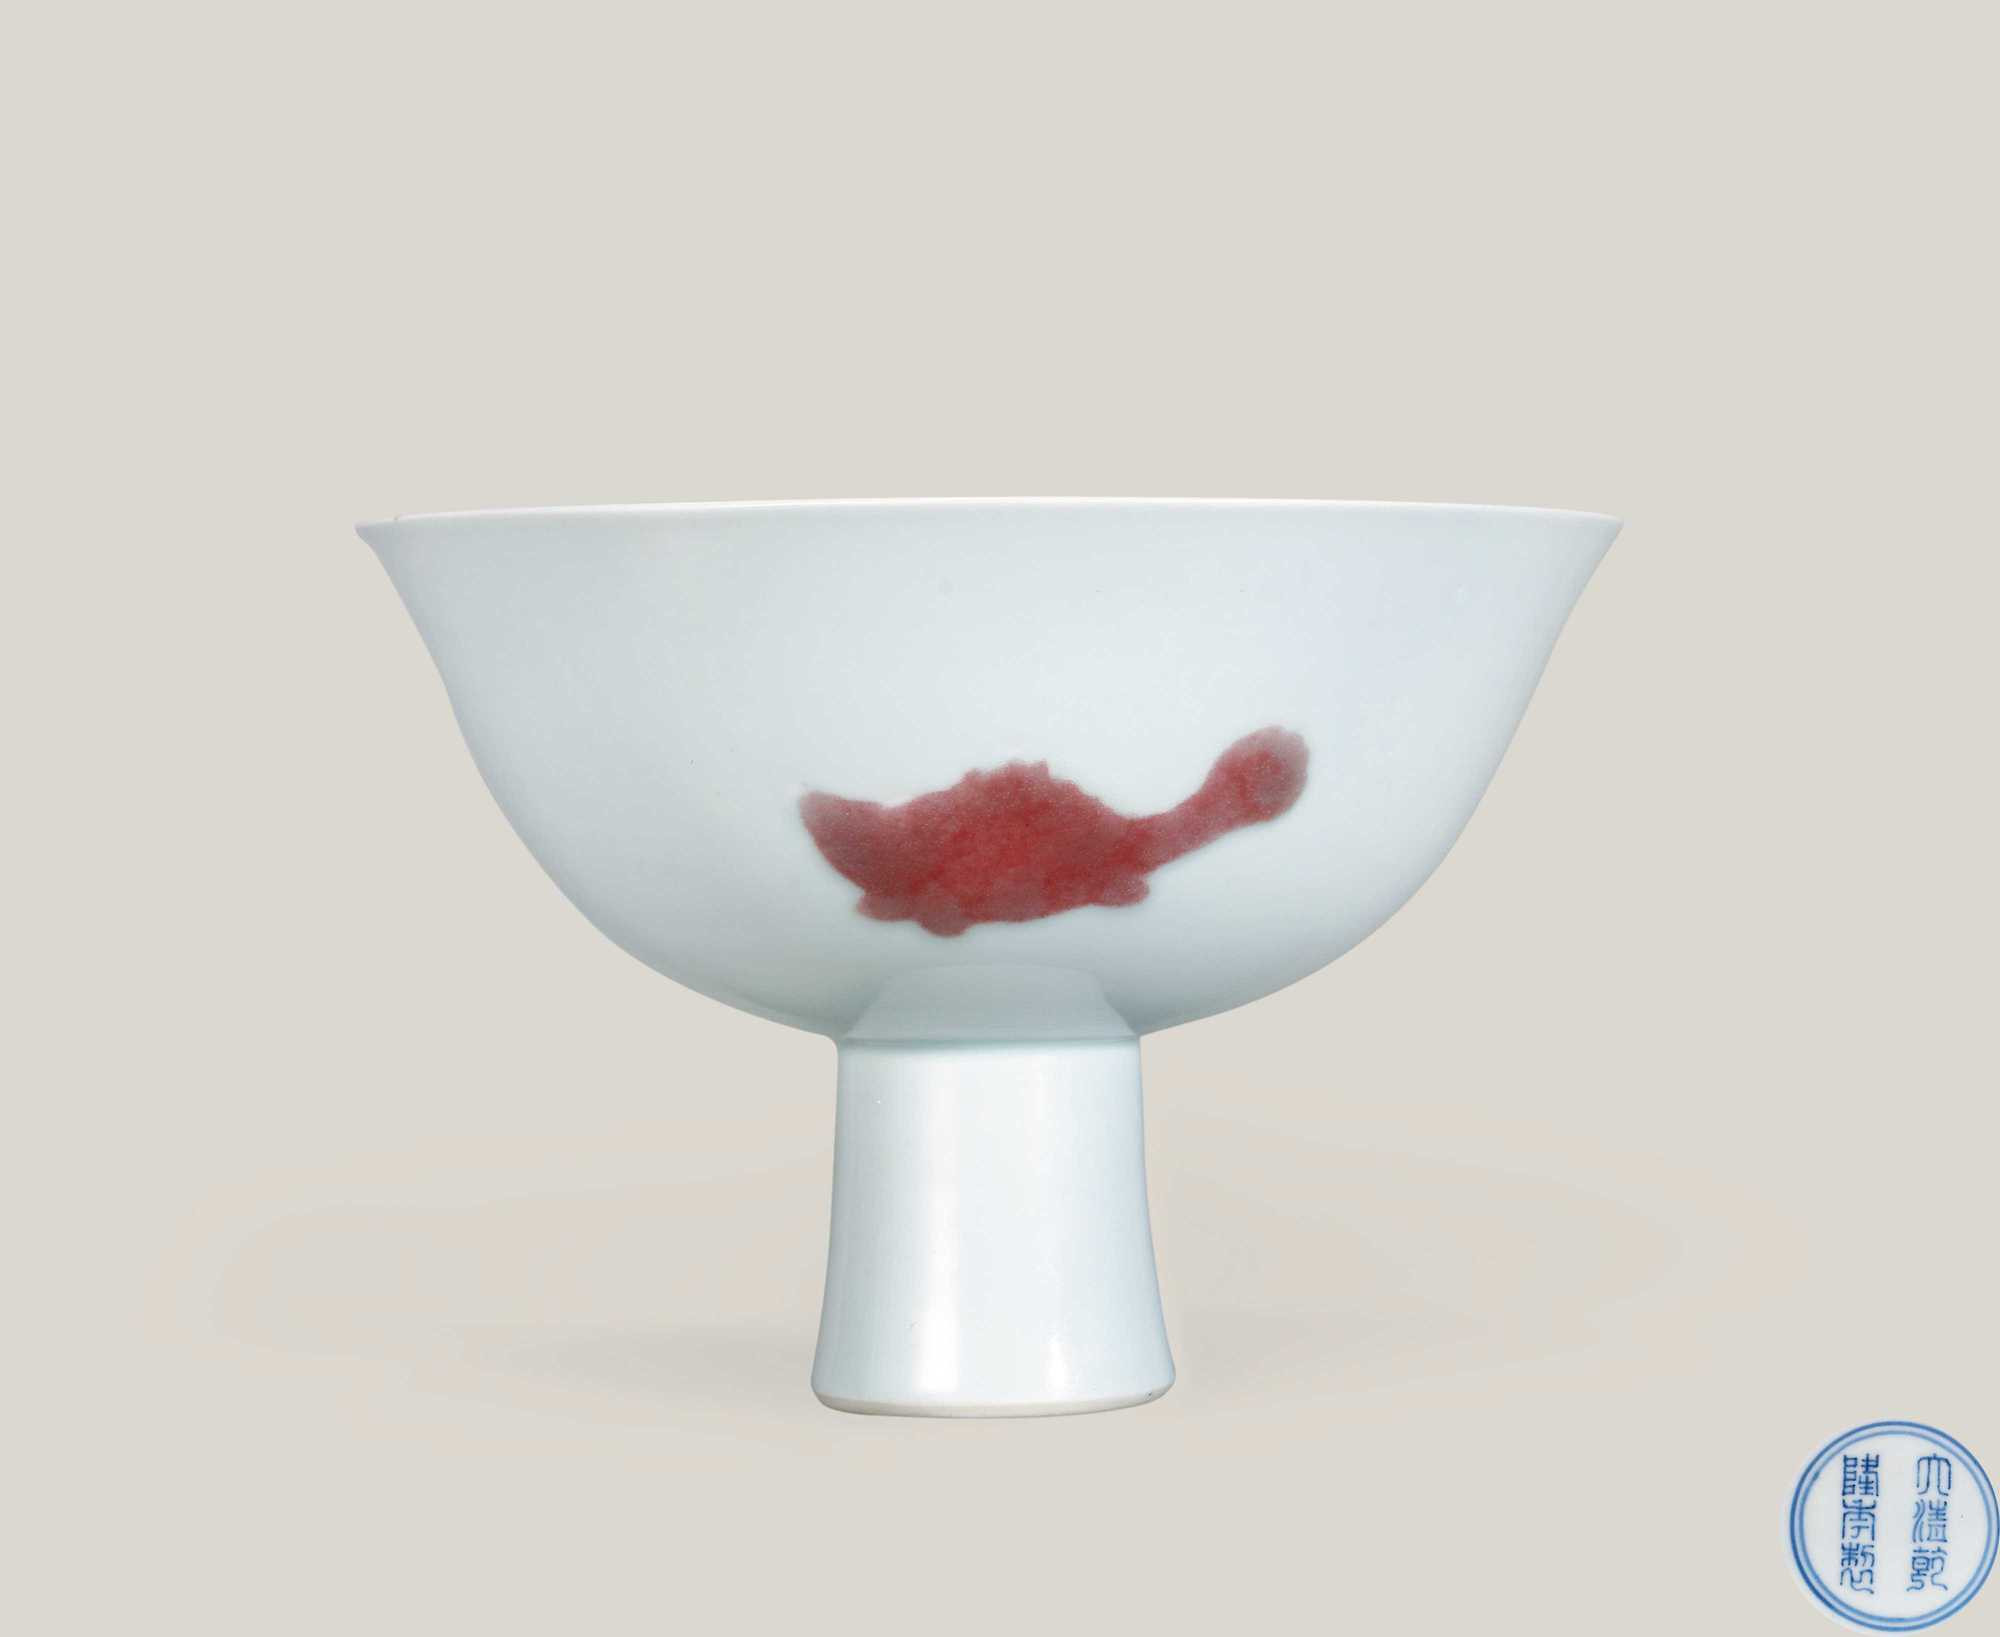 A RARE COPPER-RED‘FISH’STEM-bowl